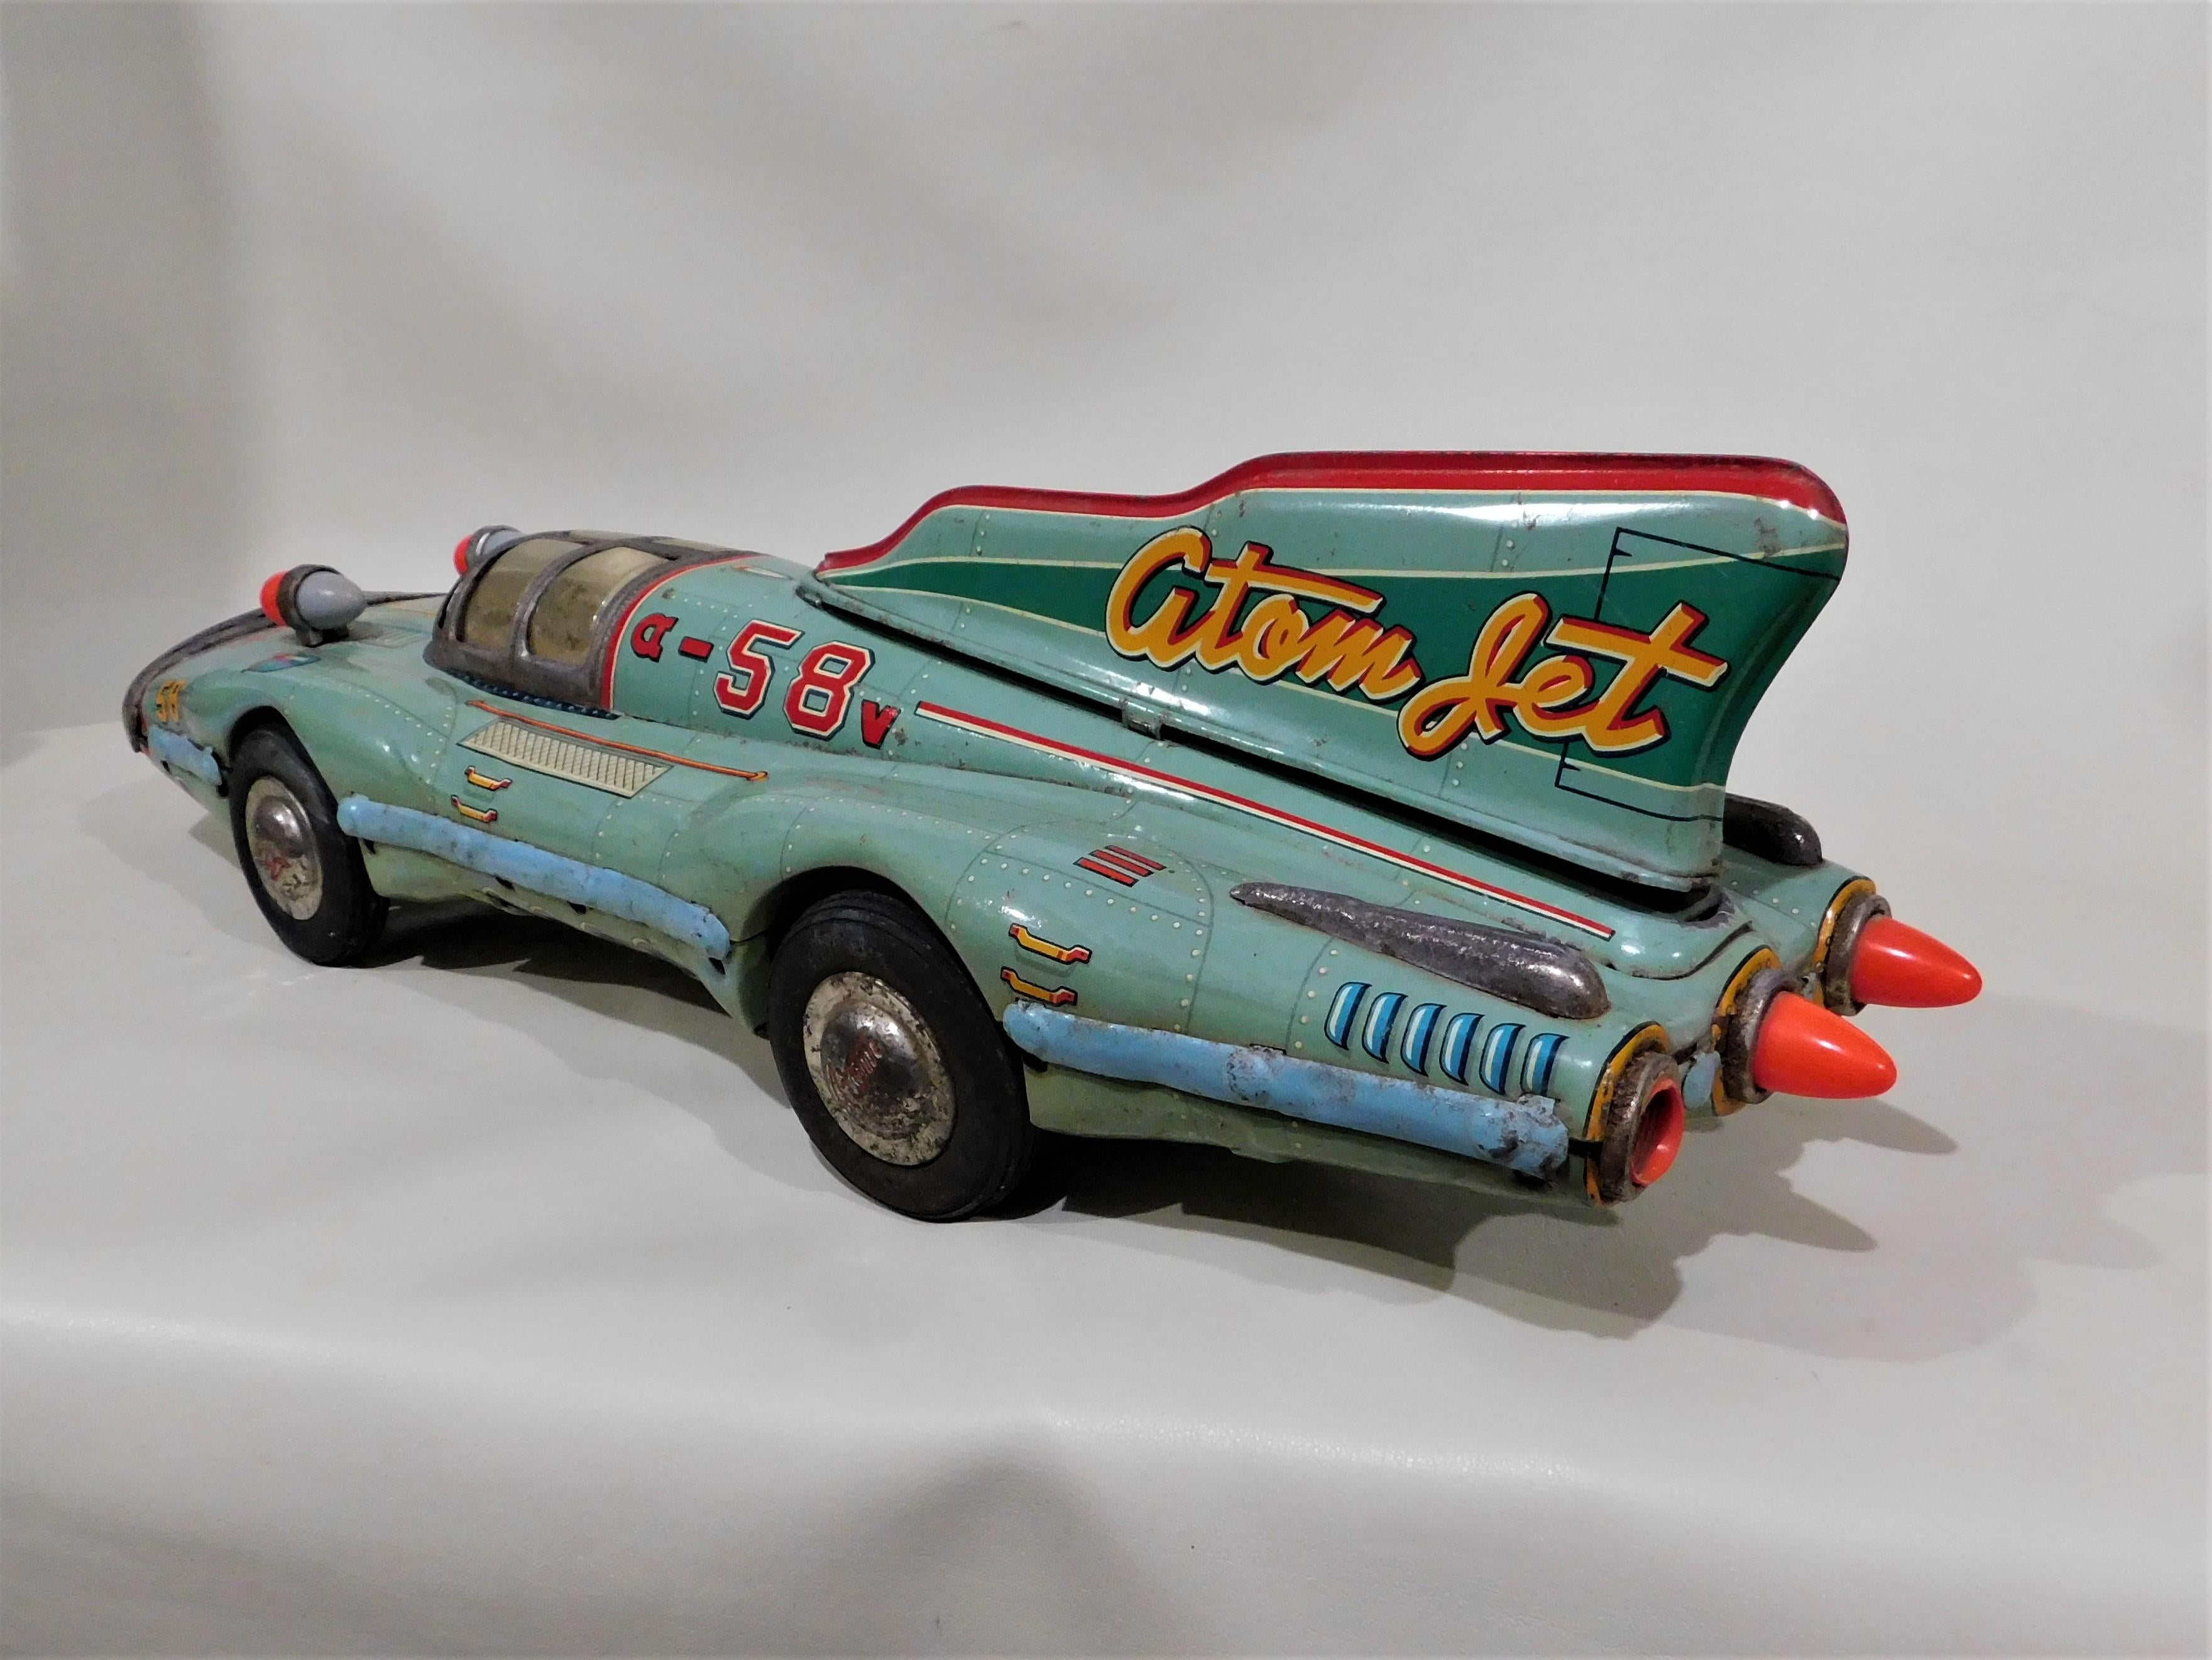 Rare 1950s Atom Jet #58 Tin Litho Friction Race Car Space Toy Yonezawa Japan 5